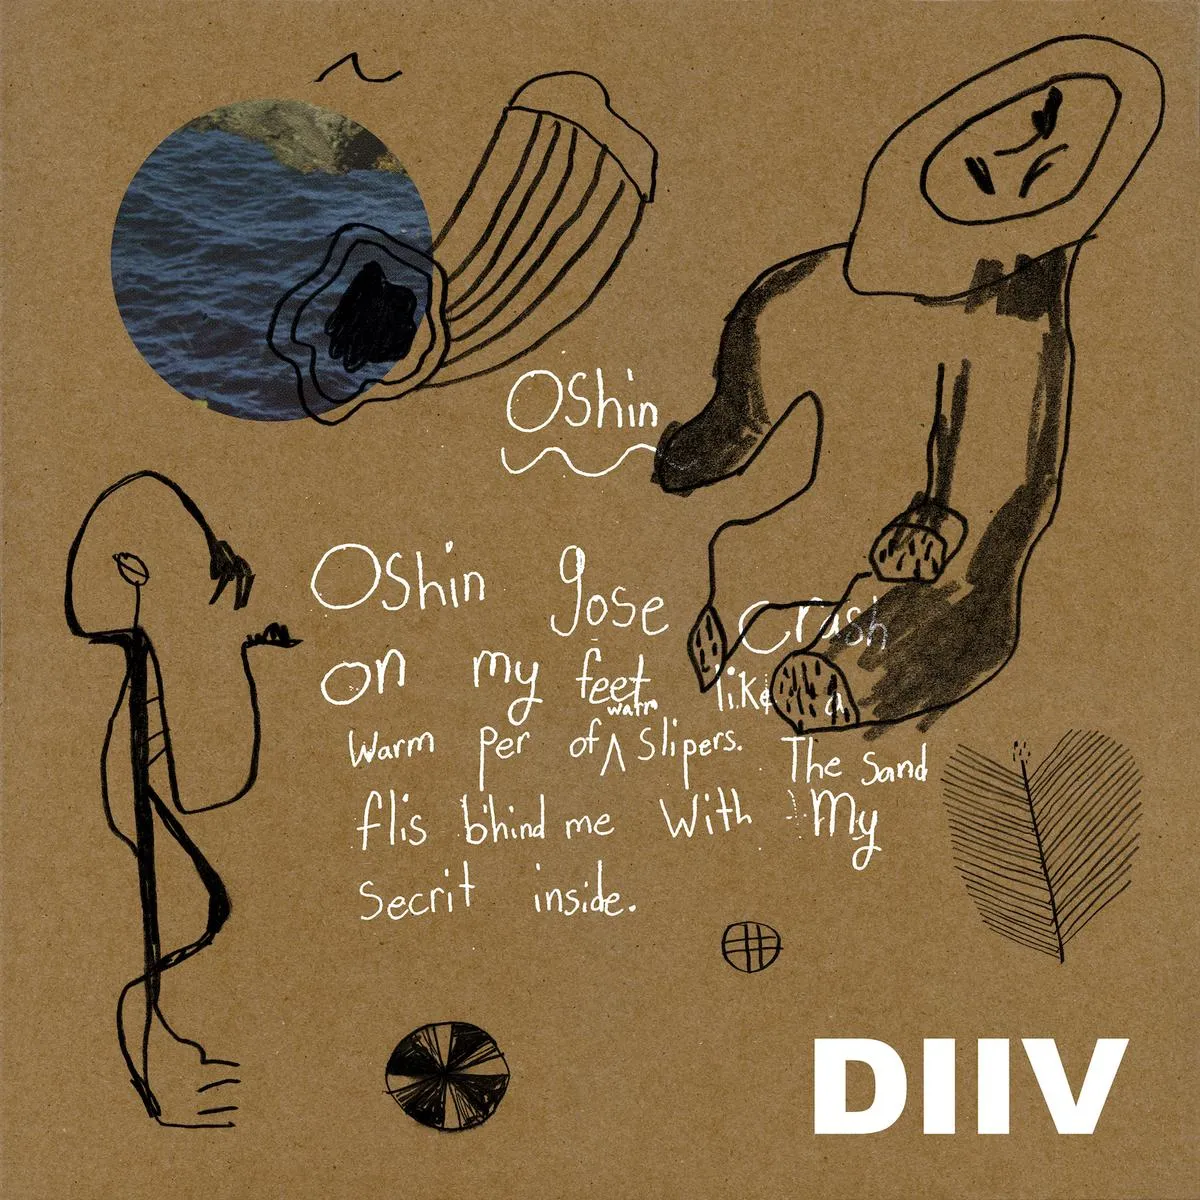 <strong>DIIV - Oshin - 10th Anniversary Reissue</strong> (Vinyl LP - blue)